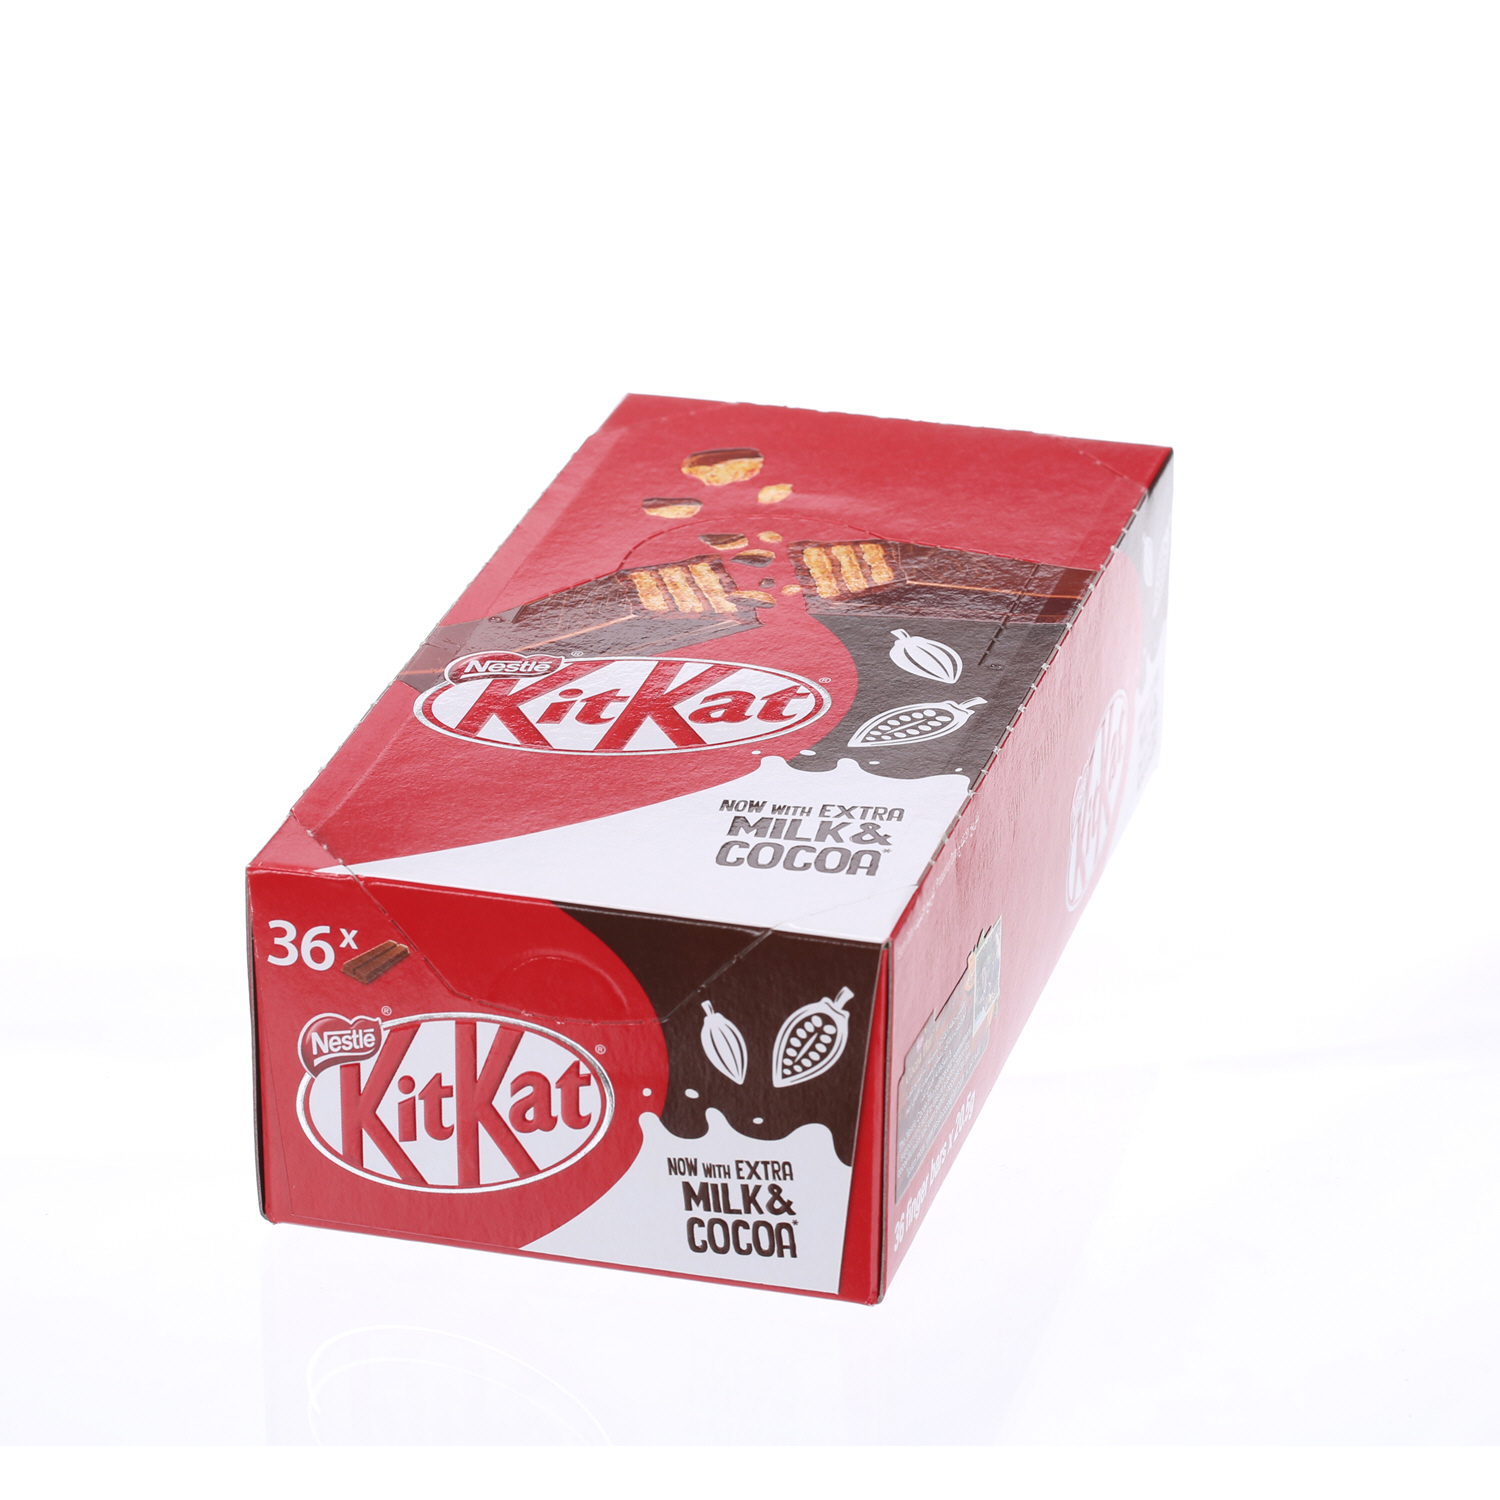 Nestlé Kit Kat Chocolate 2 Finger 20.7gm × 36'S